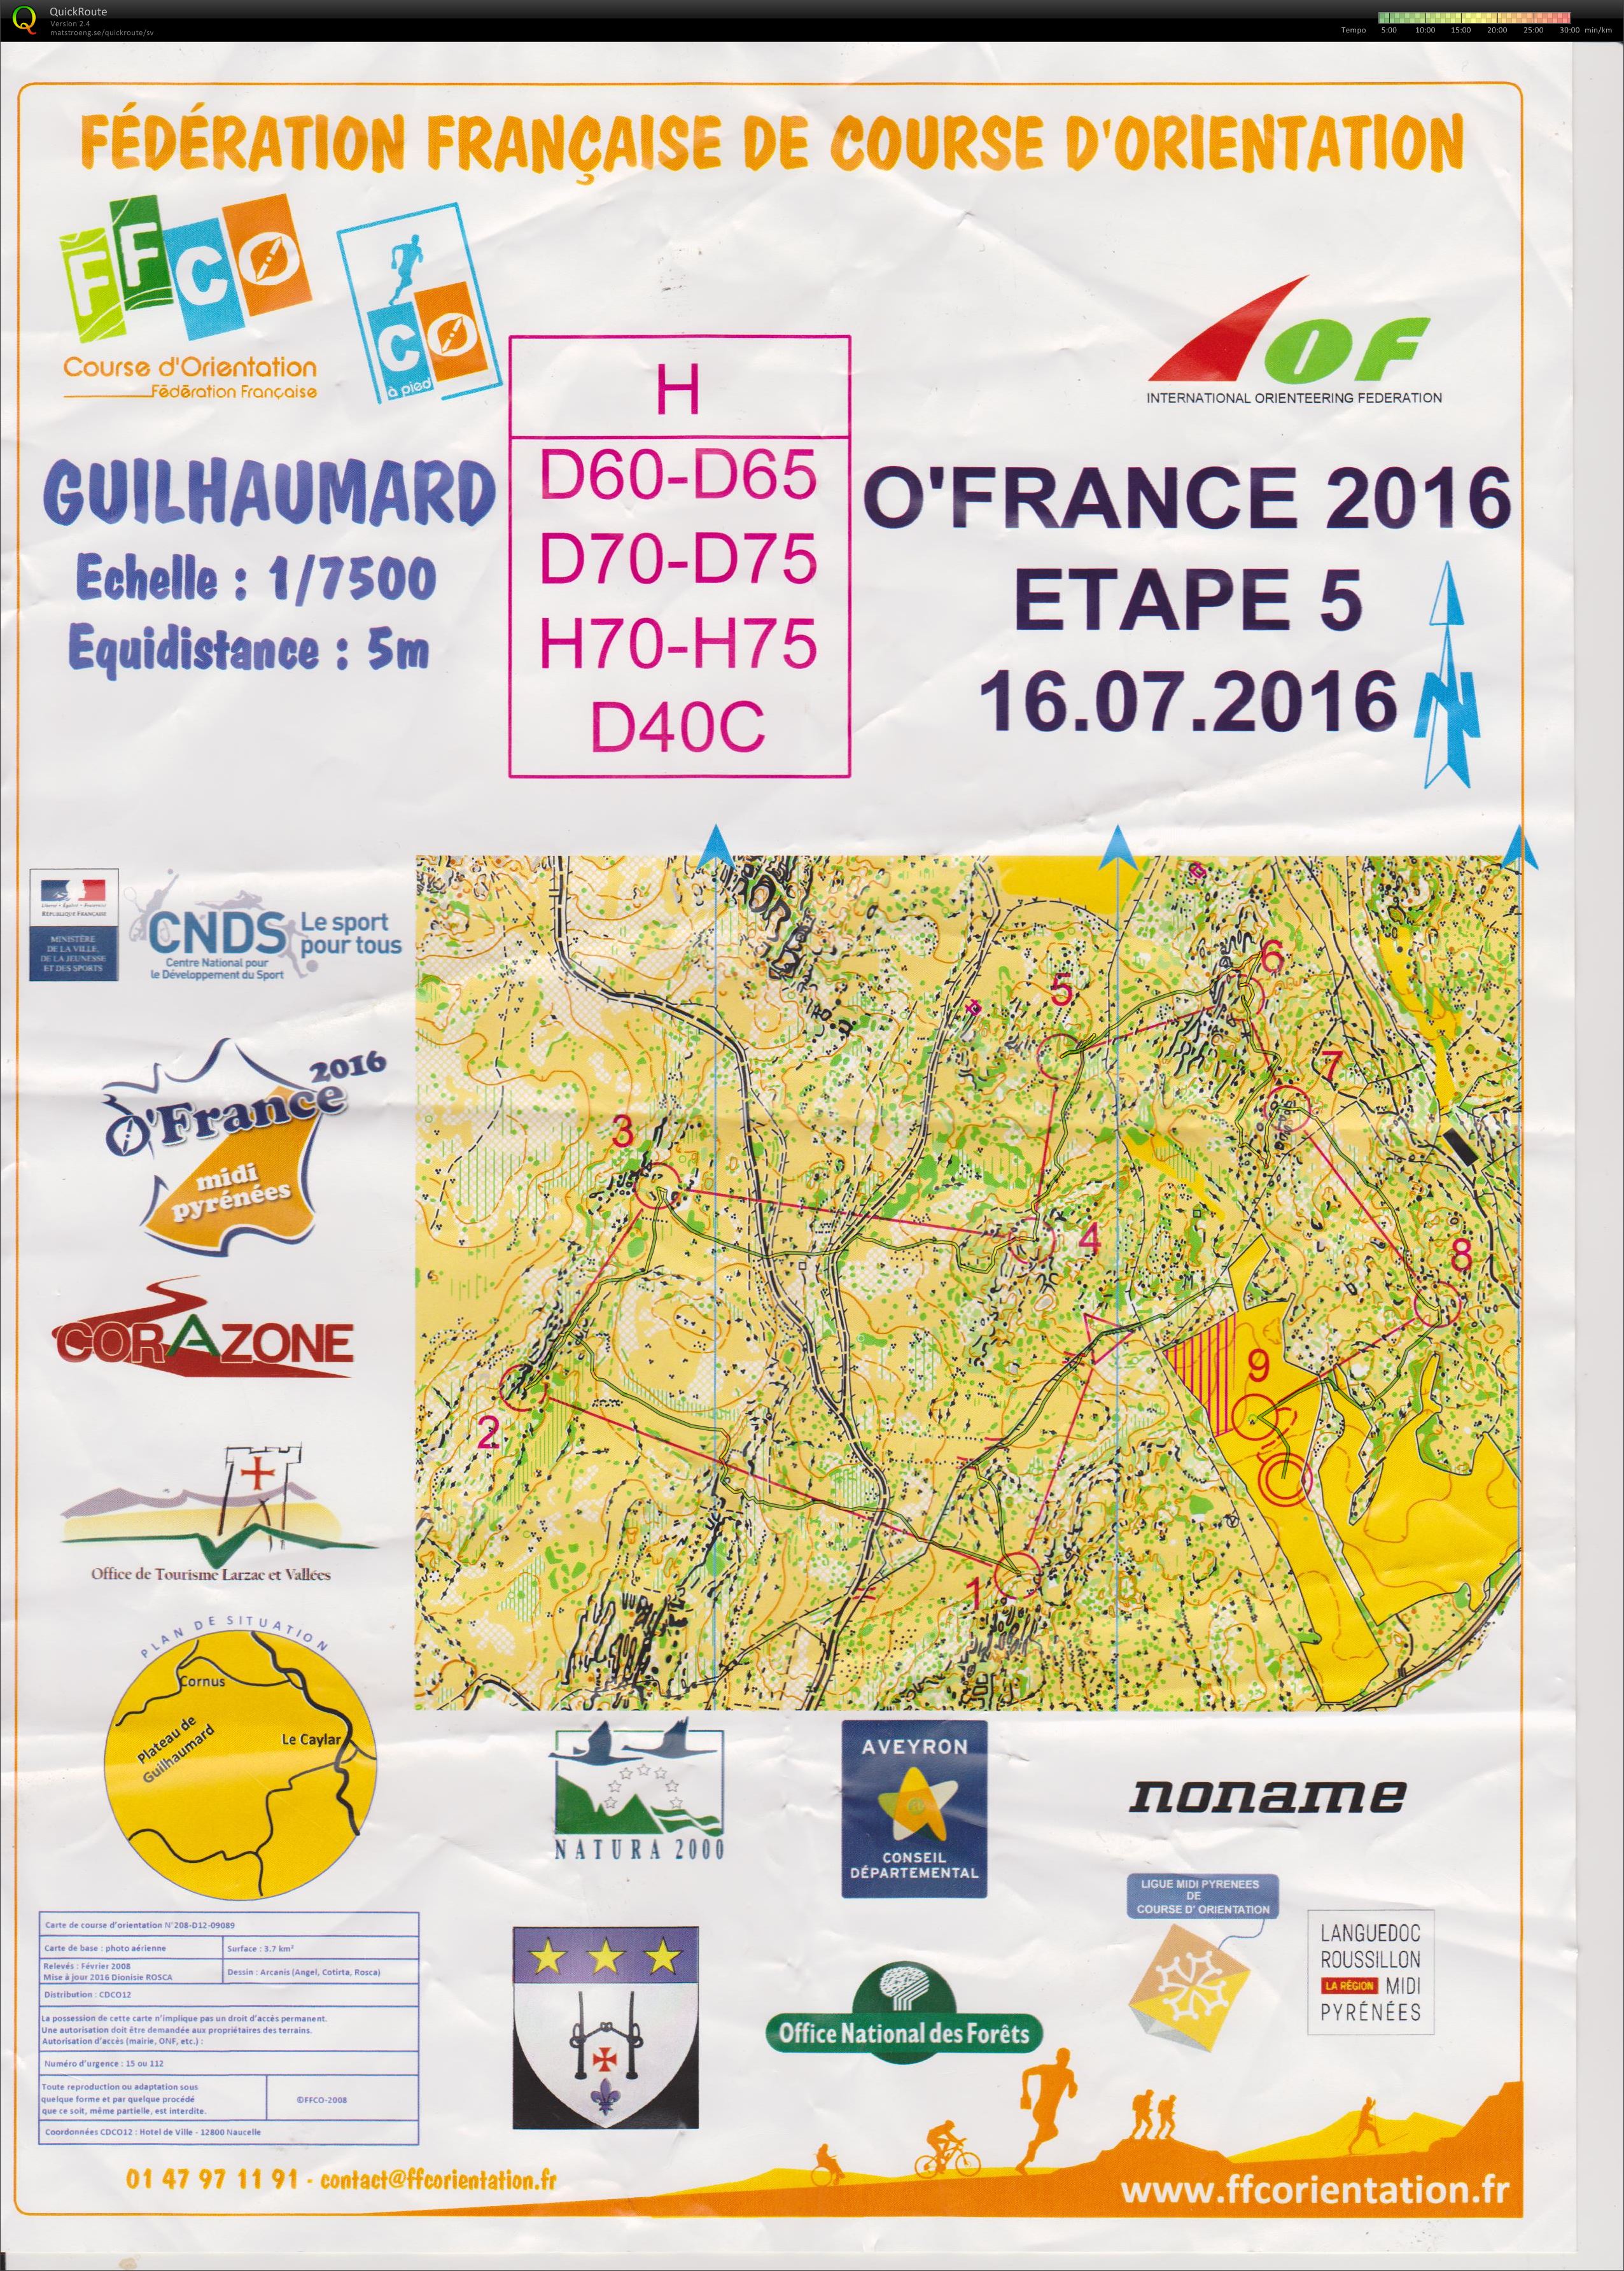 O'France 2016 Etp 5  (16.07.2016)